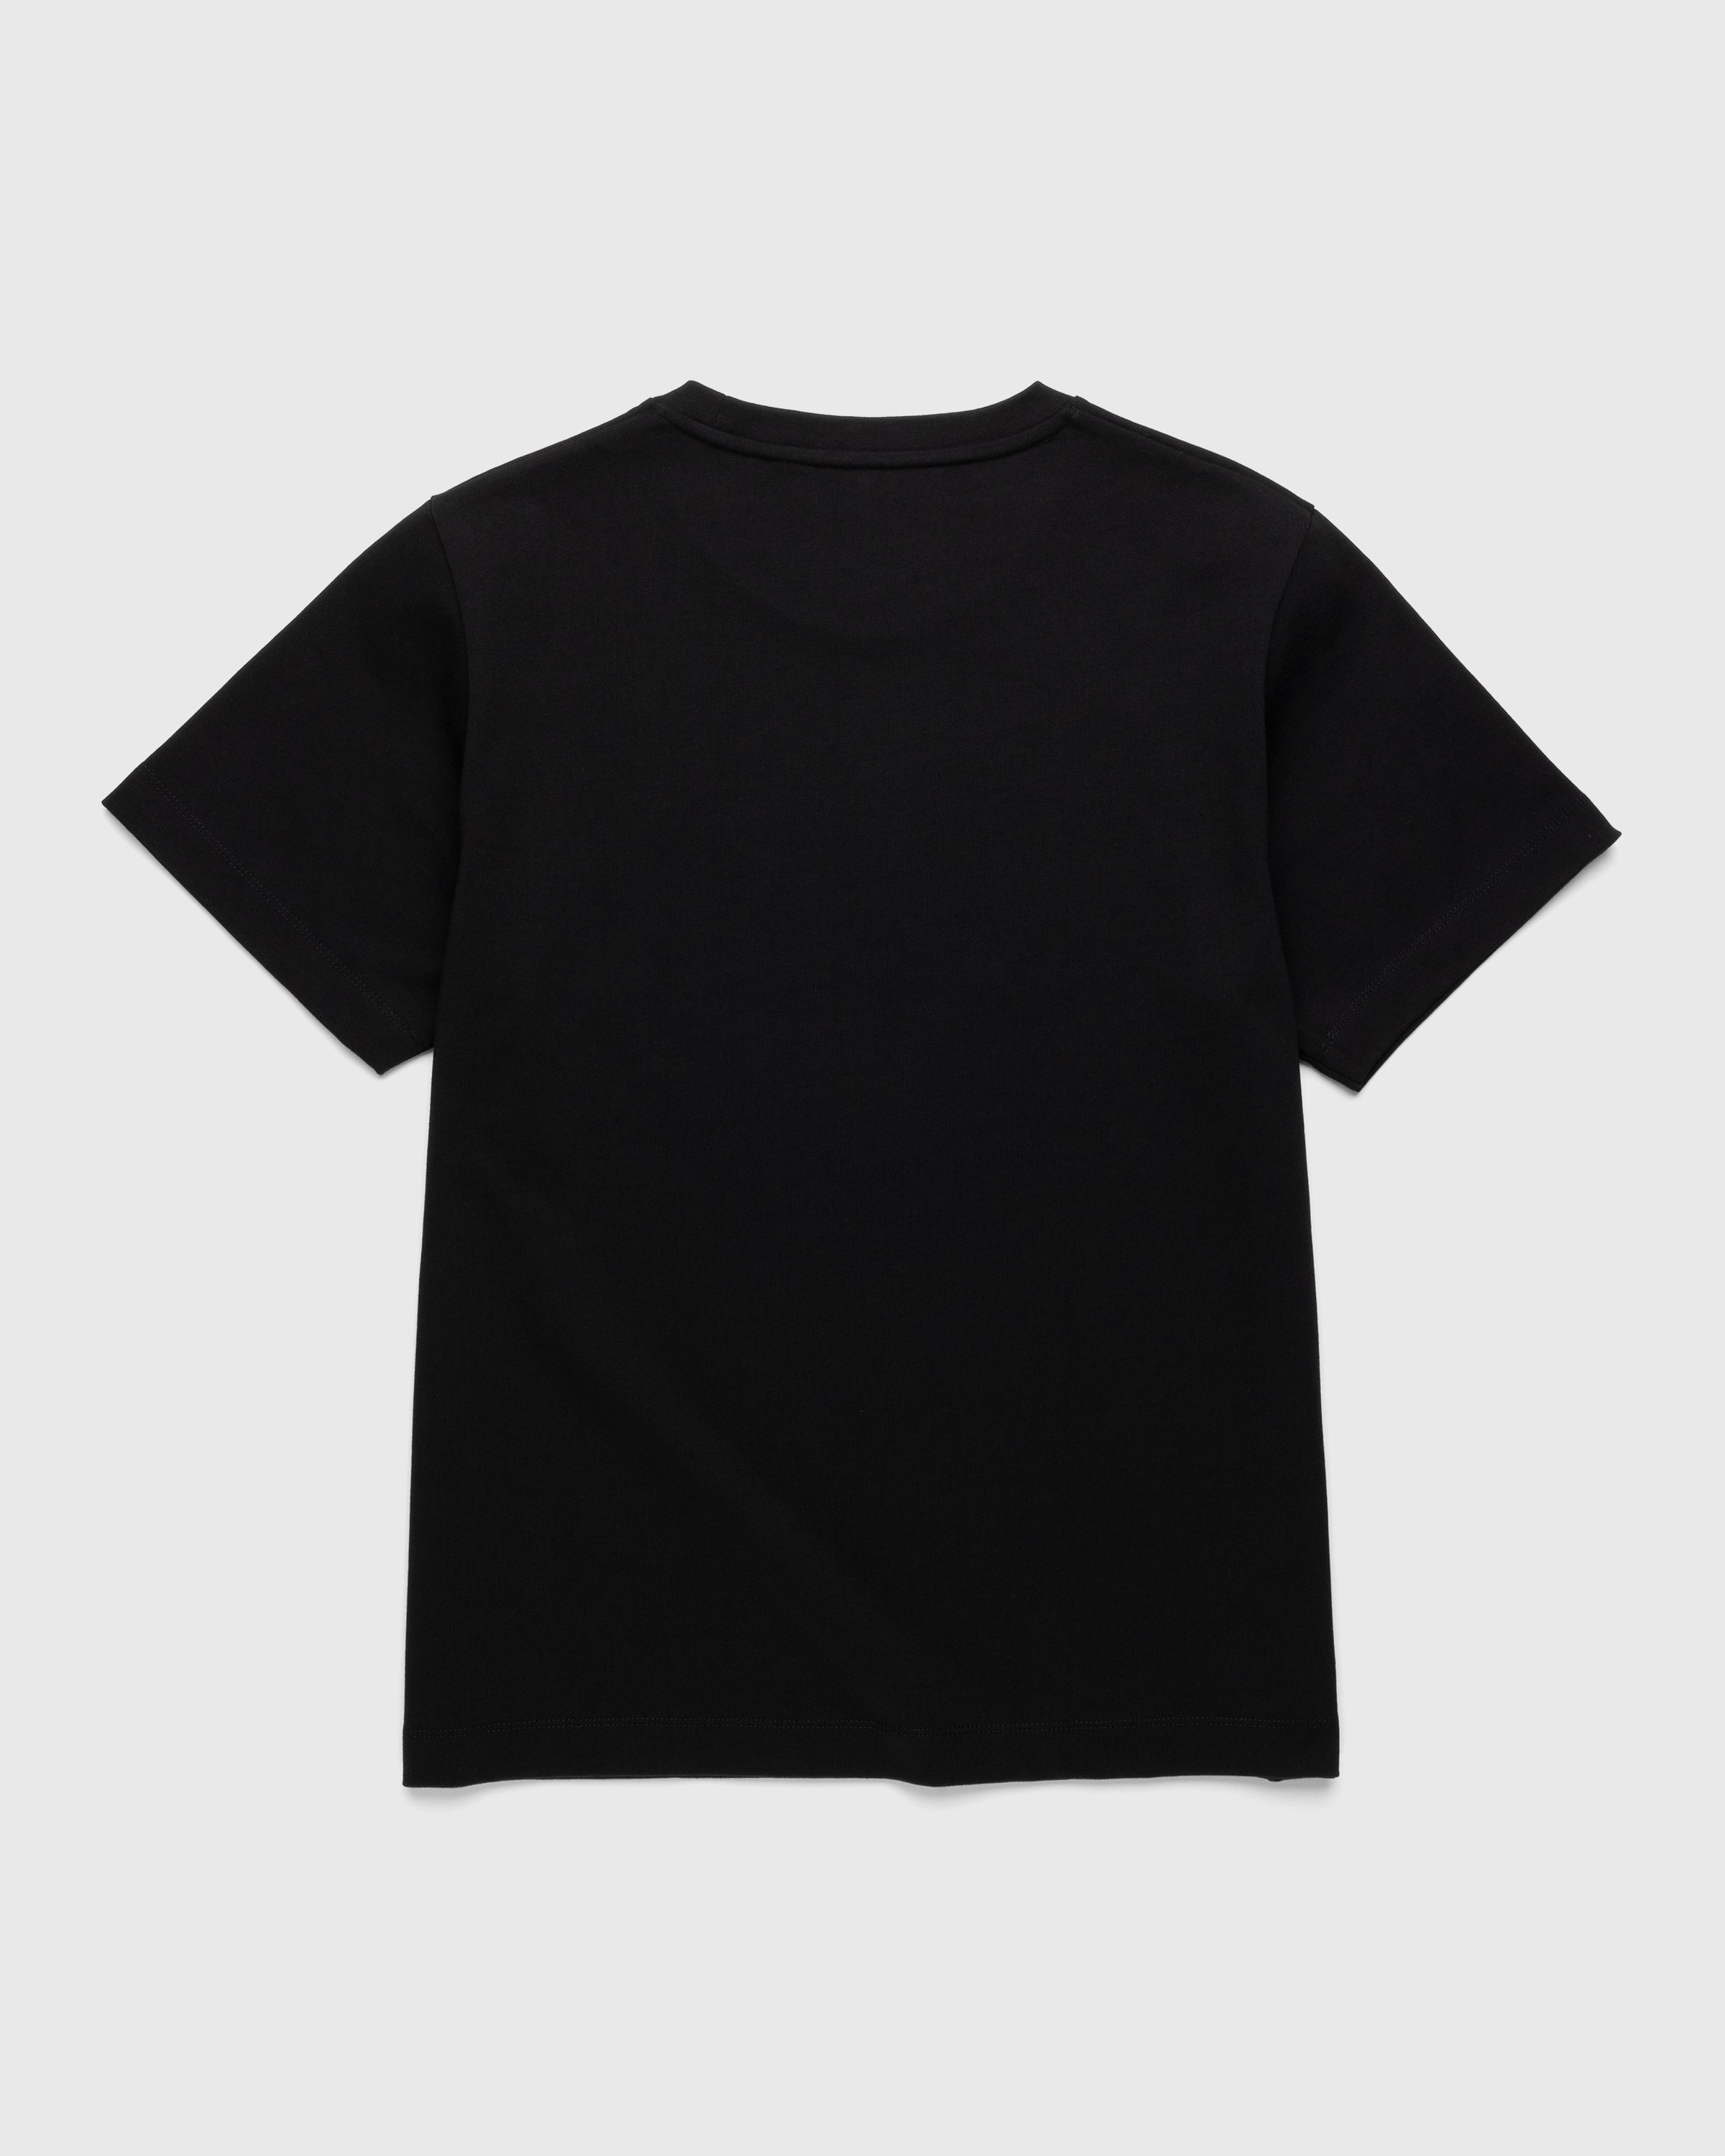 Marine Serre - Organic Cotton T-Shirt Black - Clothing - Black - Image 3